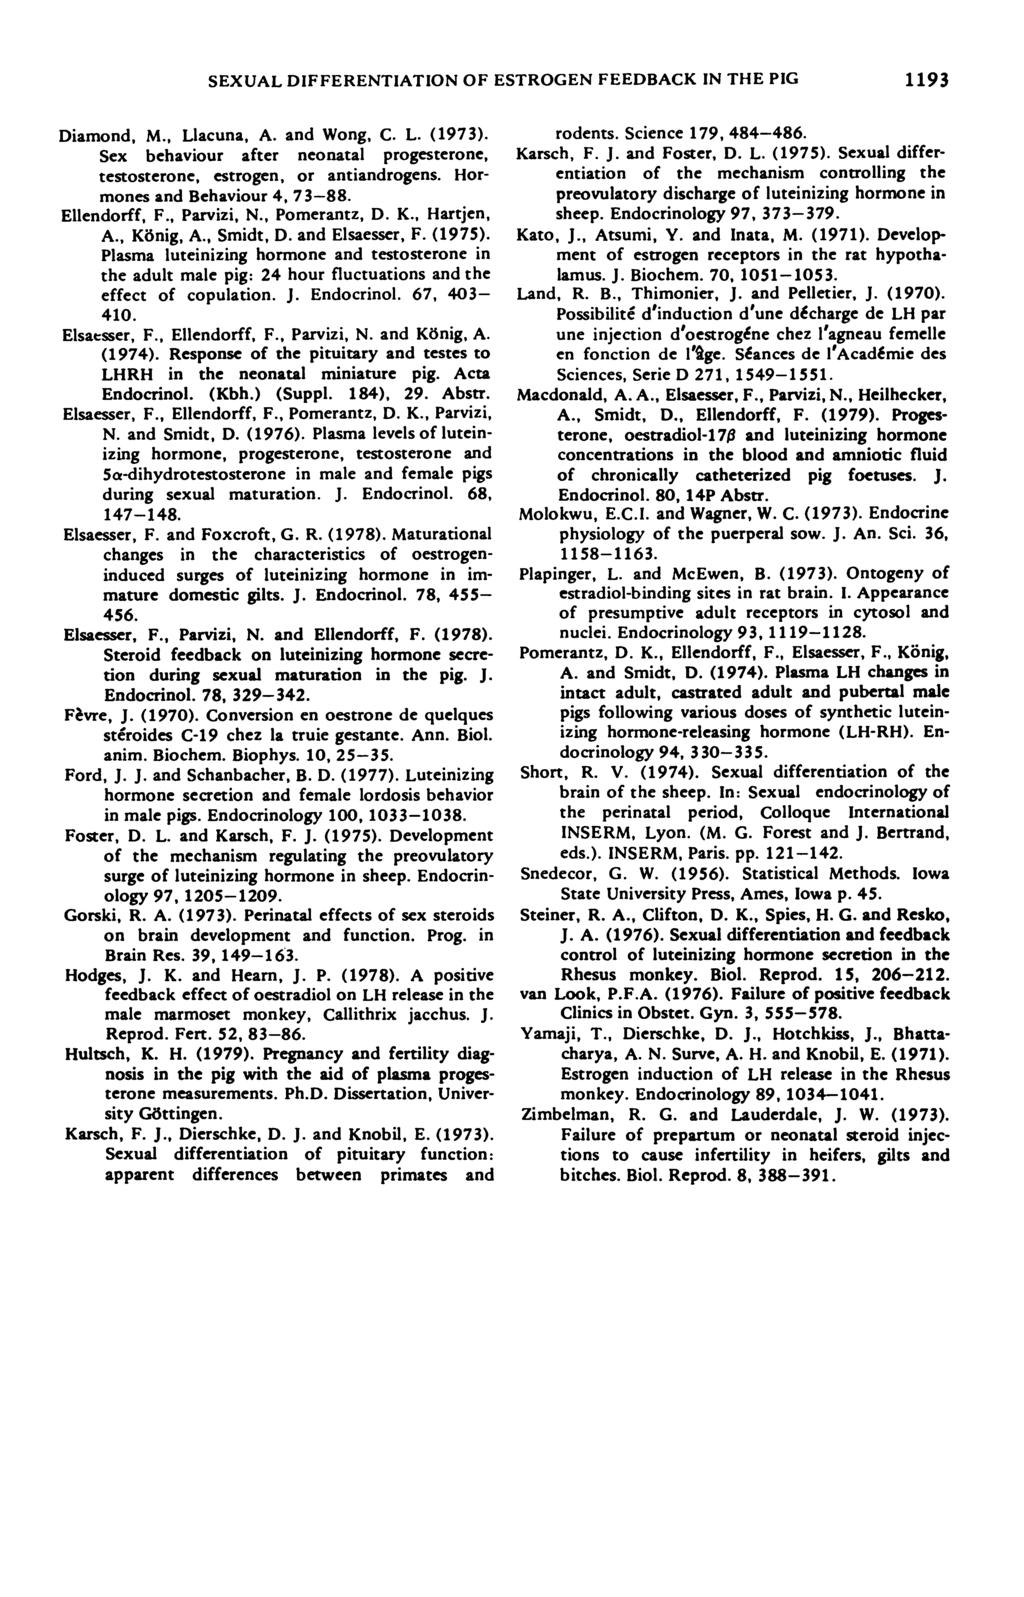 SEXAL DFFERETATO OF ESTROGE FEEDBAK THE PG 1193 Diamond, M, Llacuna, A and Wong L (1973) Sex behaviour after neonatal progesterone, testosterone, estrogen, or antiandrogens Hormones and Behaviour 4,